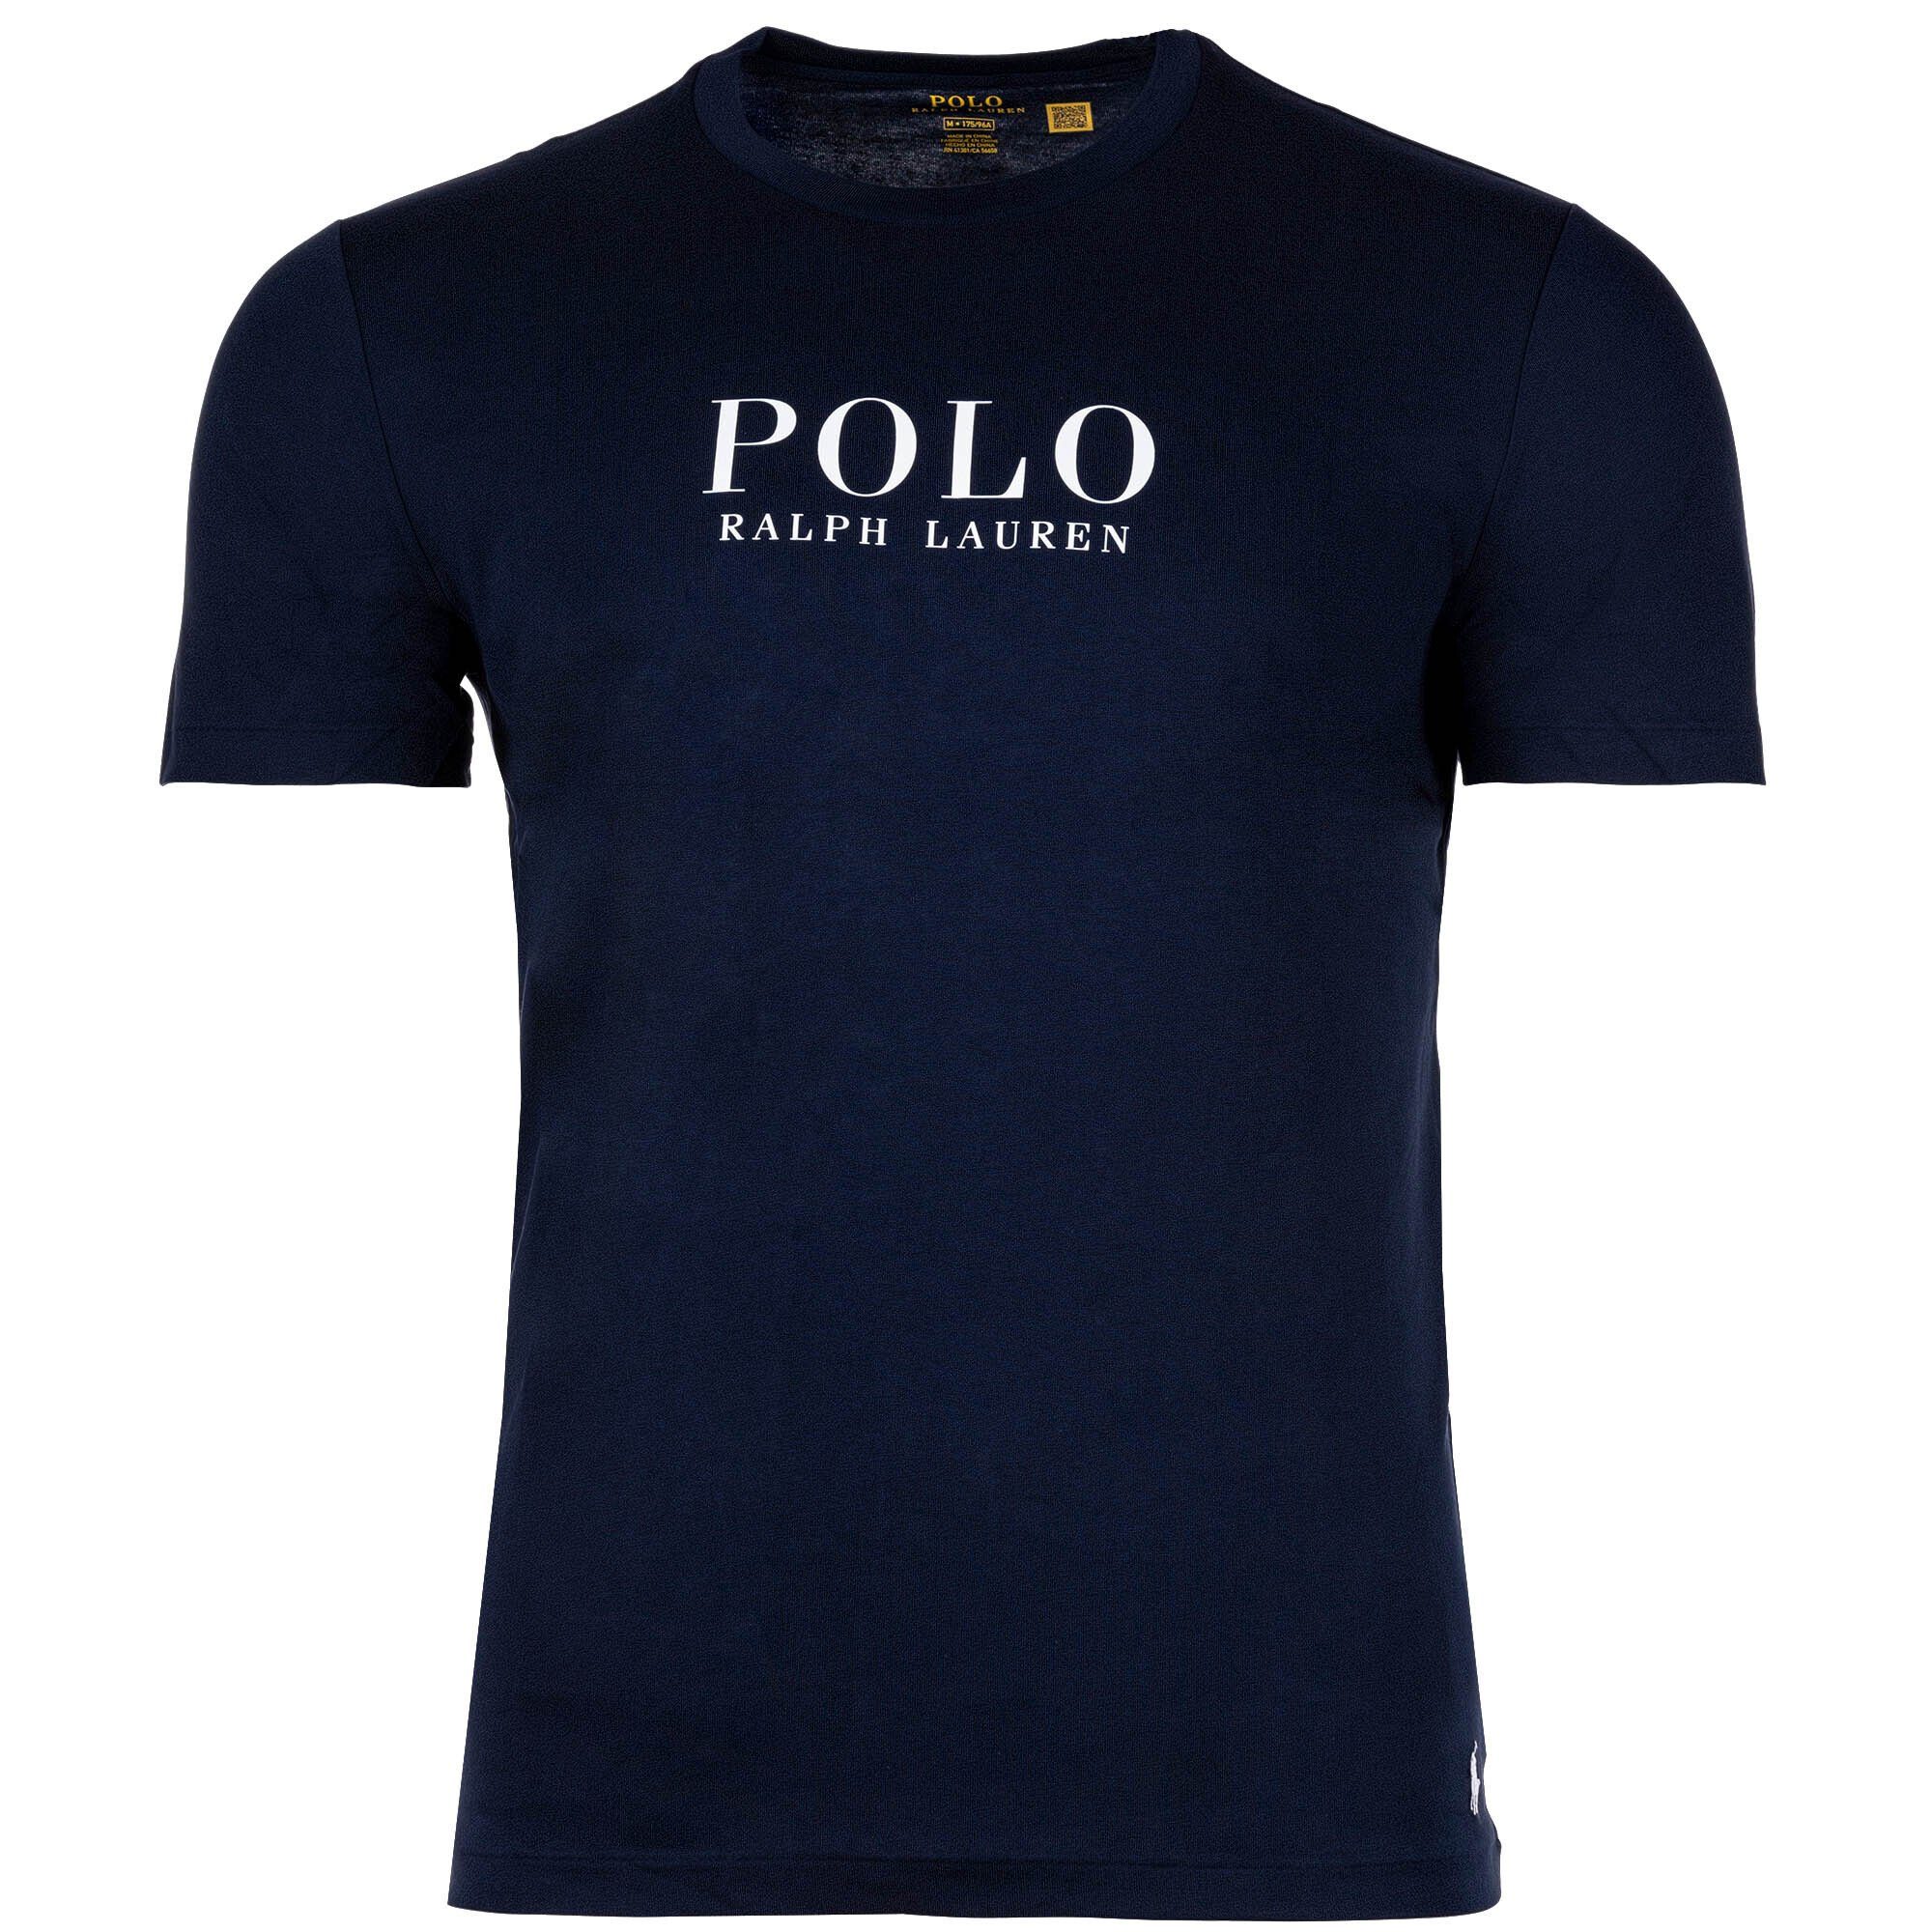 Polo Ralph Lauren T-Shirt Herren T-Shirt - CREW-SLEEP TOP, Schlafshirt Marineblau